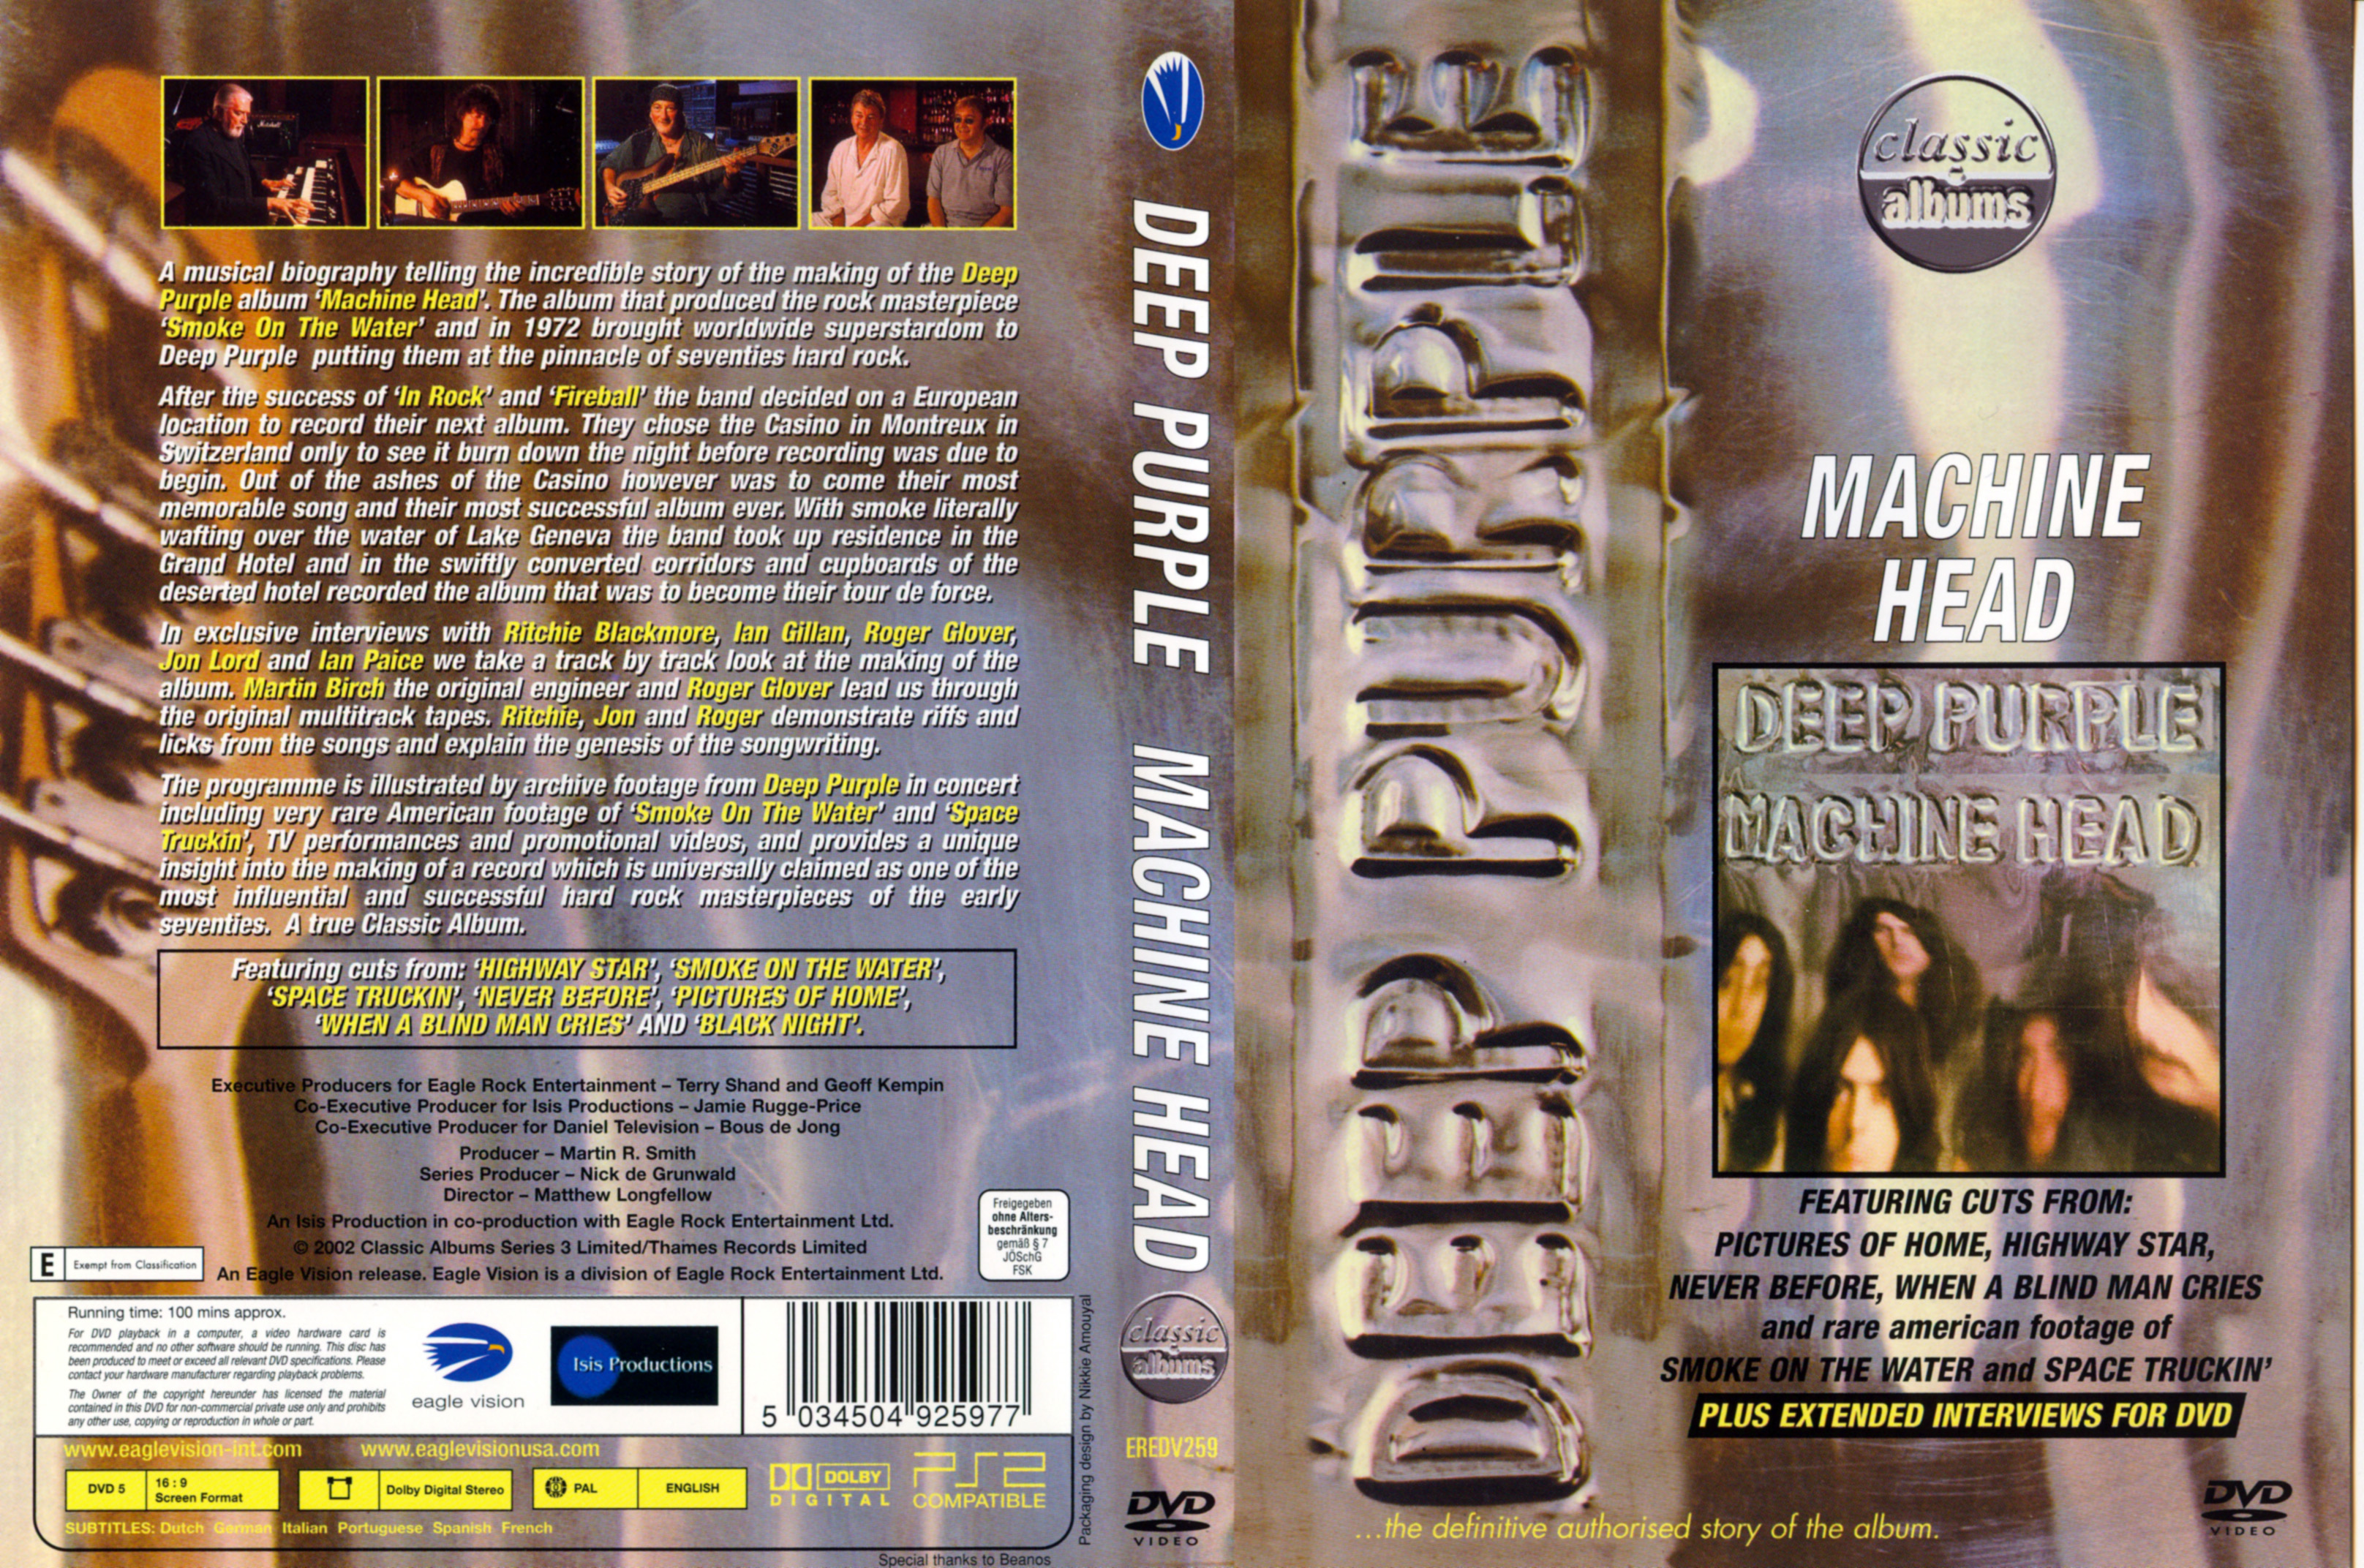 Jaquette DVD Deep Purple Machine head